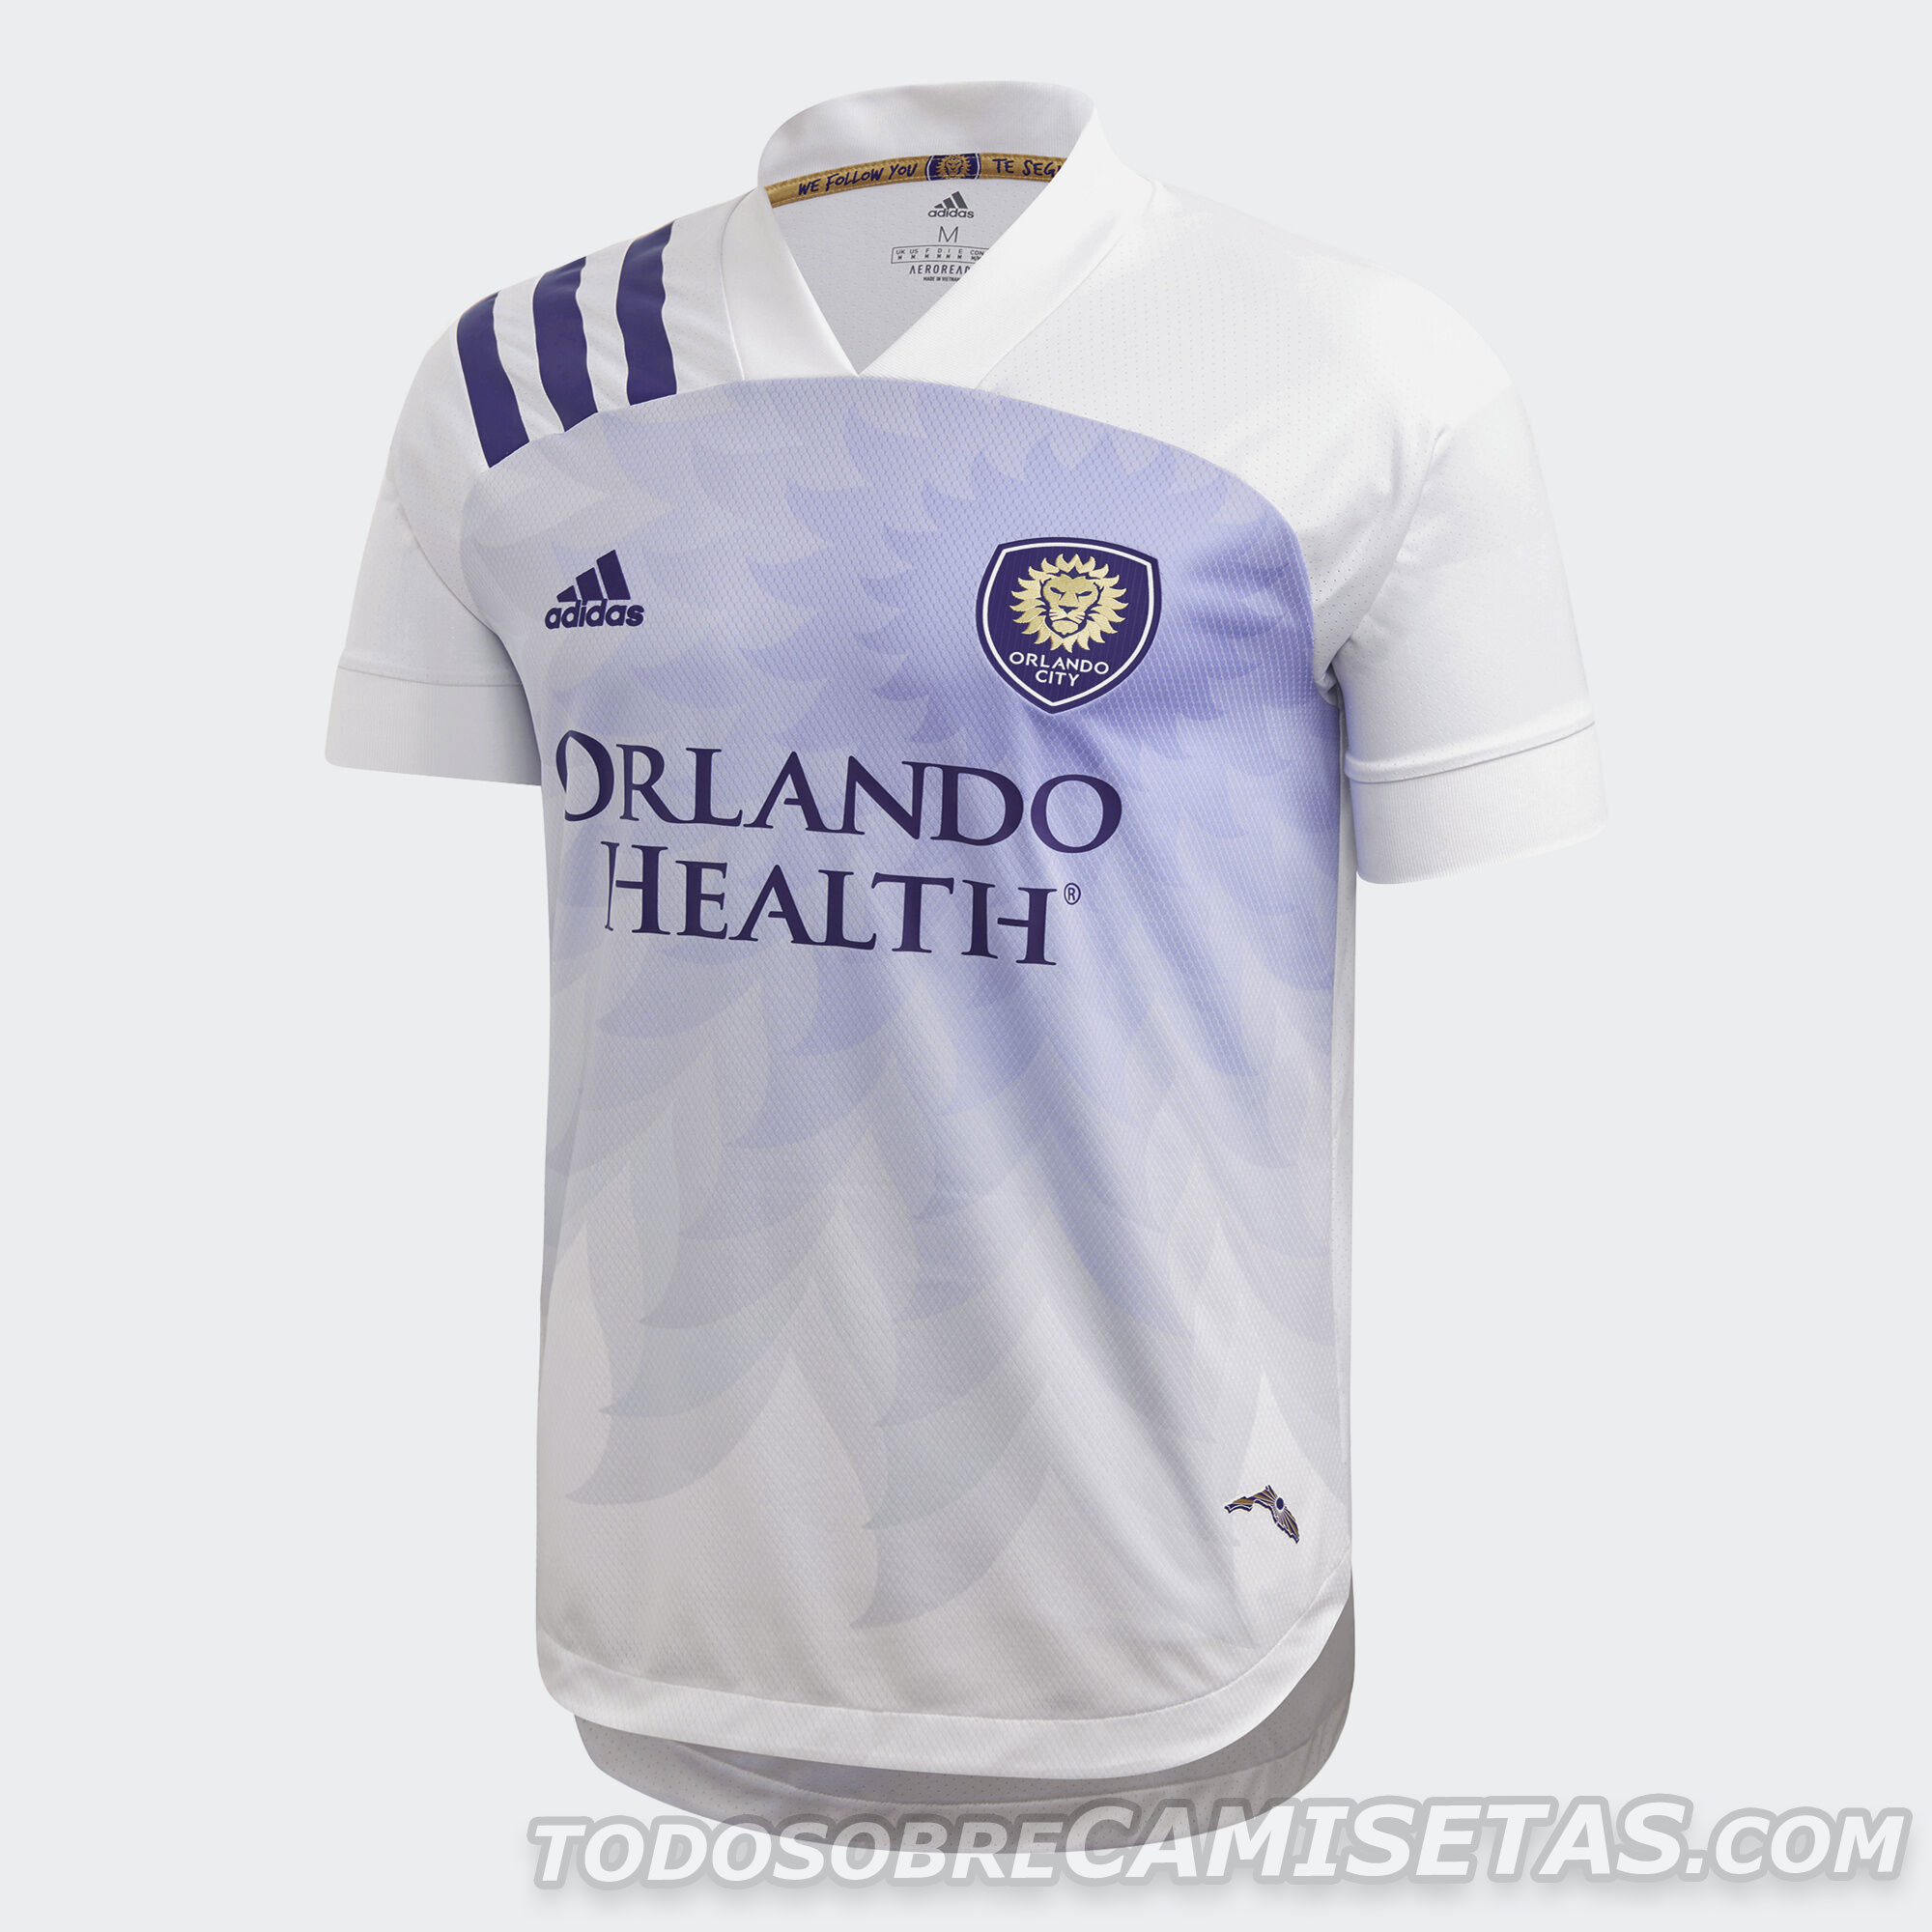 The new MLS jerseys ahead of the 2016 season - SBI Soccer